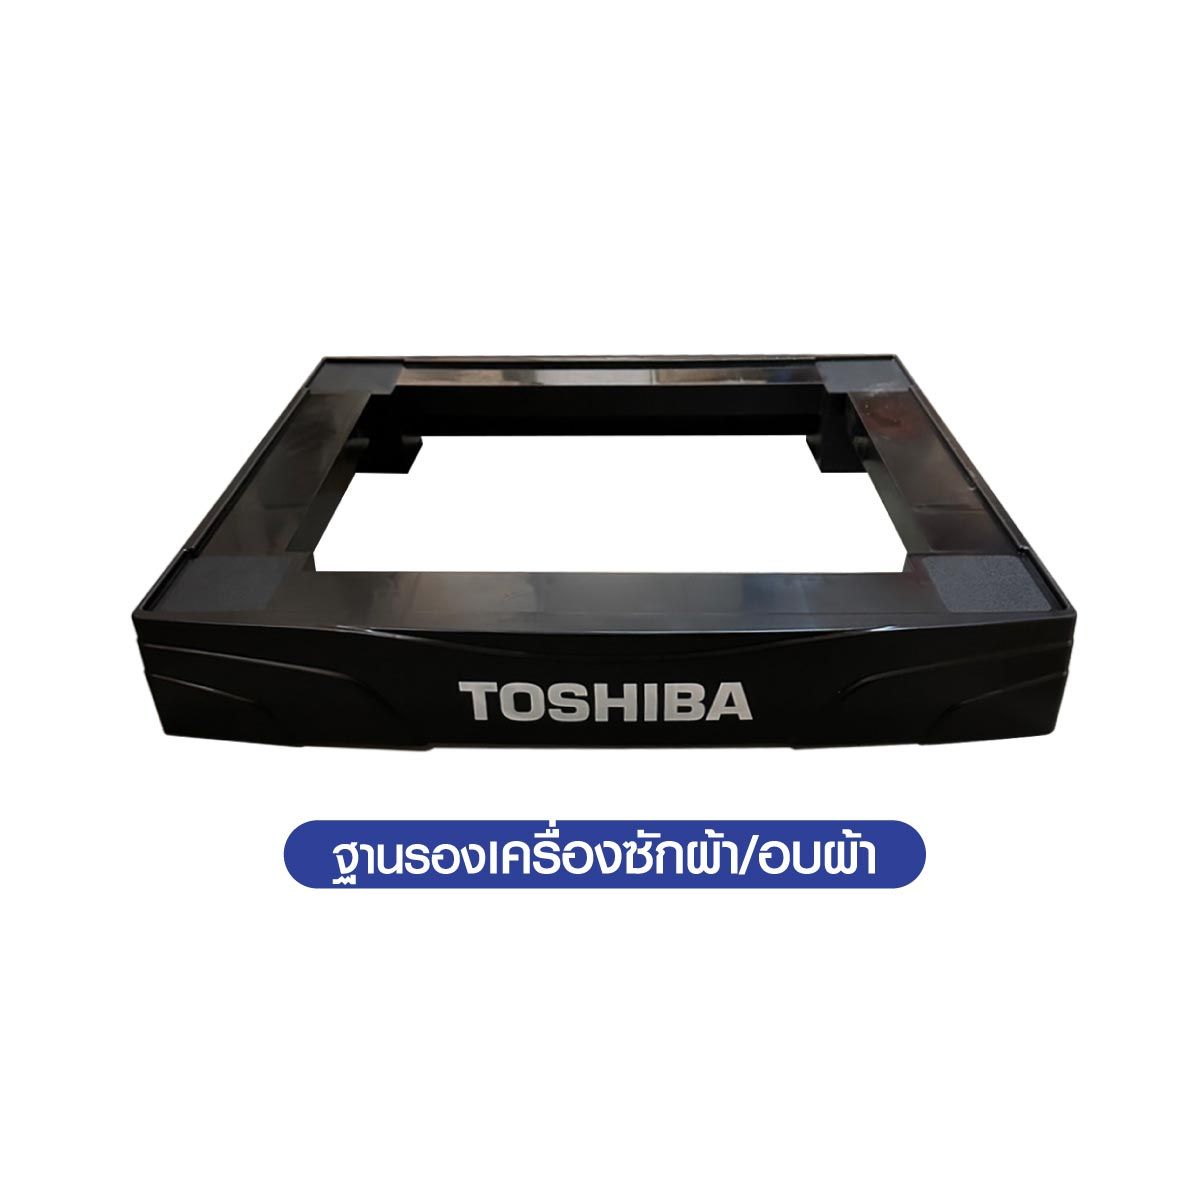 TOSHIBA เครื่องซักผ้า-อบผ้าฝาหน้า 12.5/8 กก.Wifi  รุ่น TWD-BM135GF4T